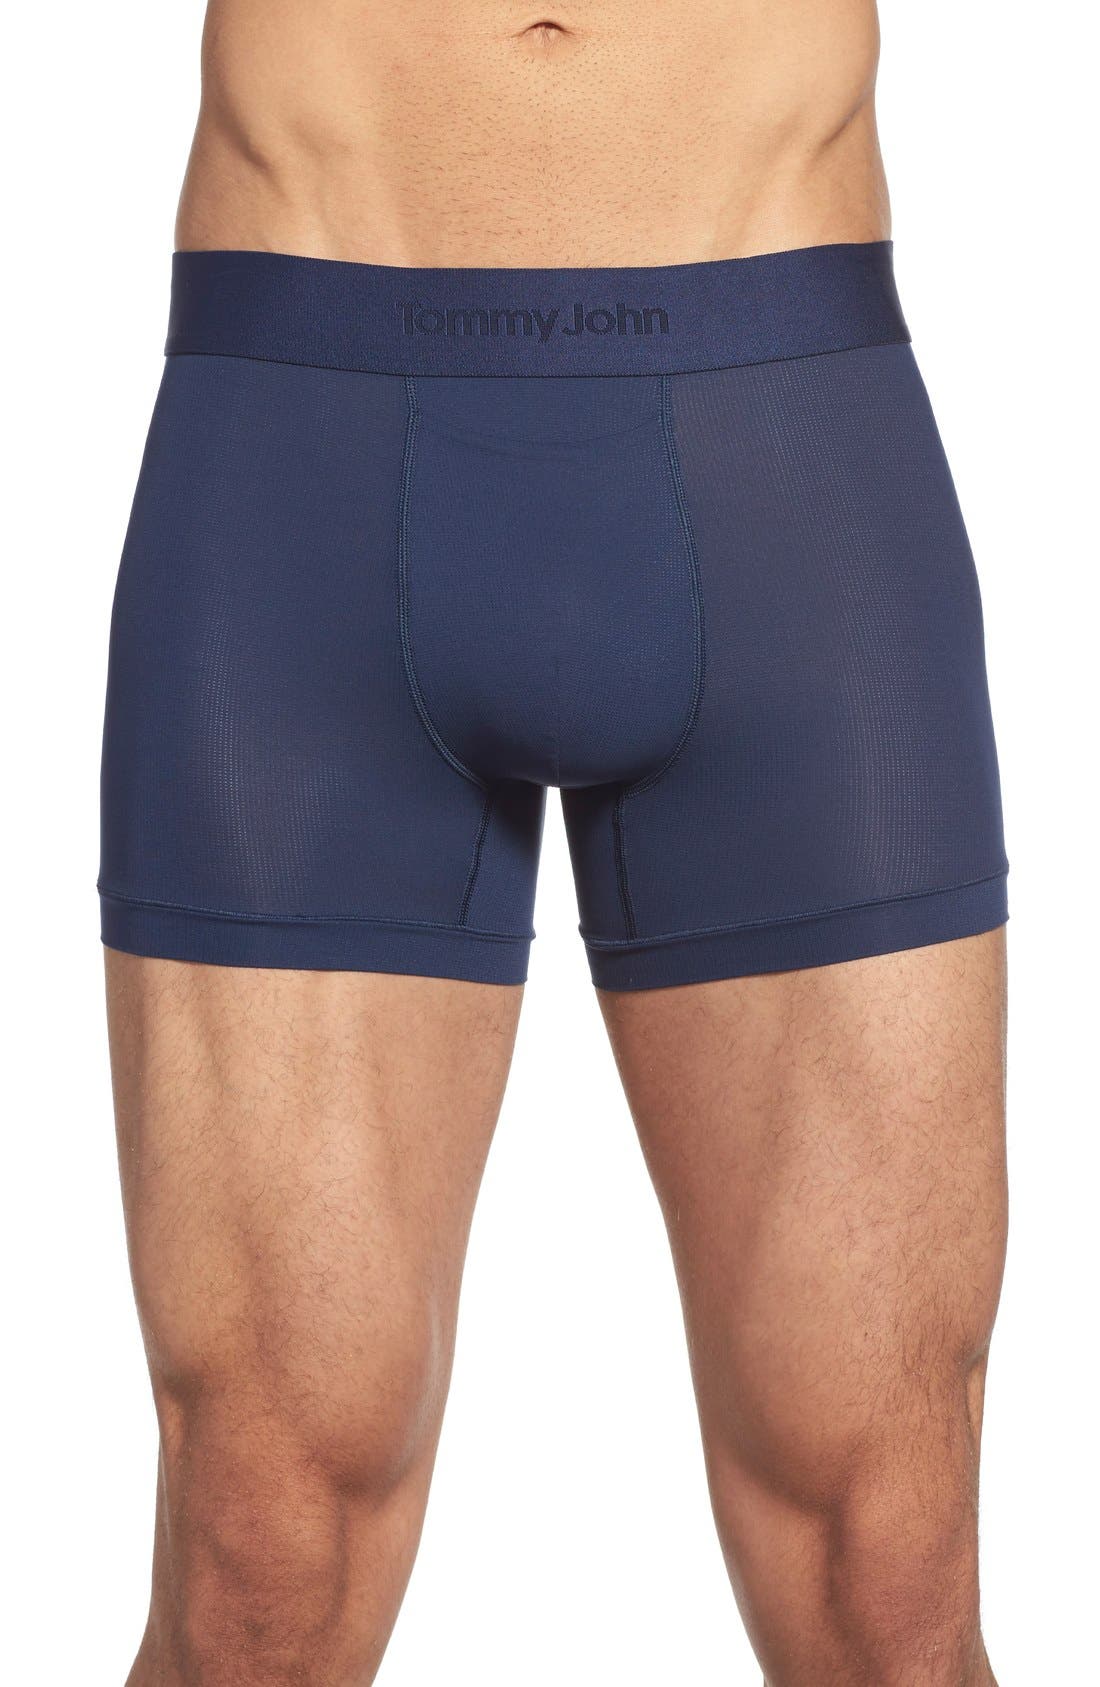 nordstrom tommy john underwear